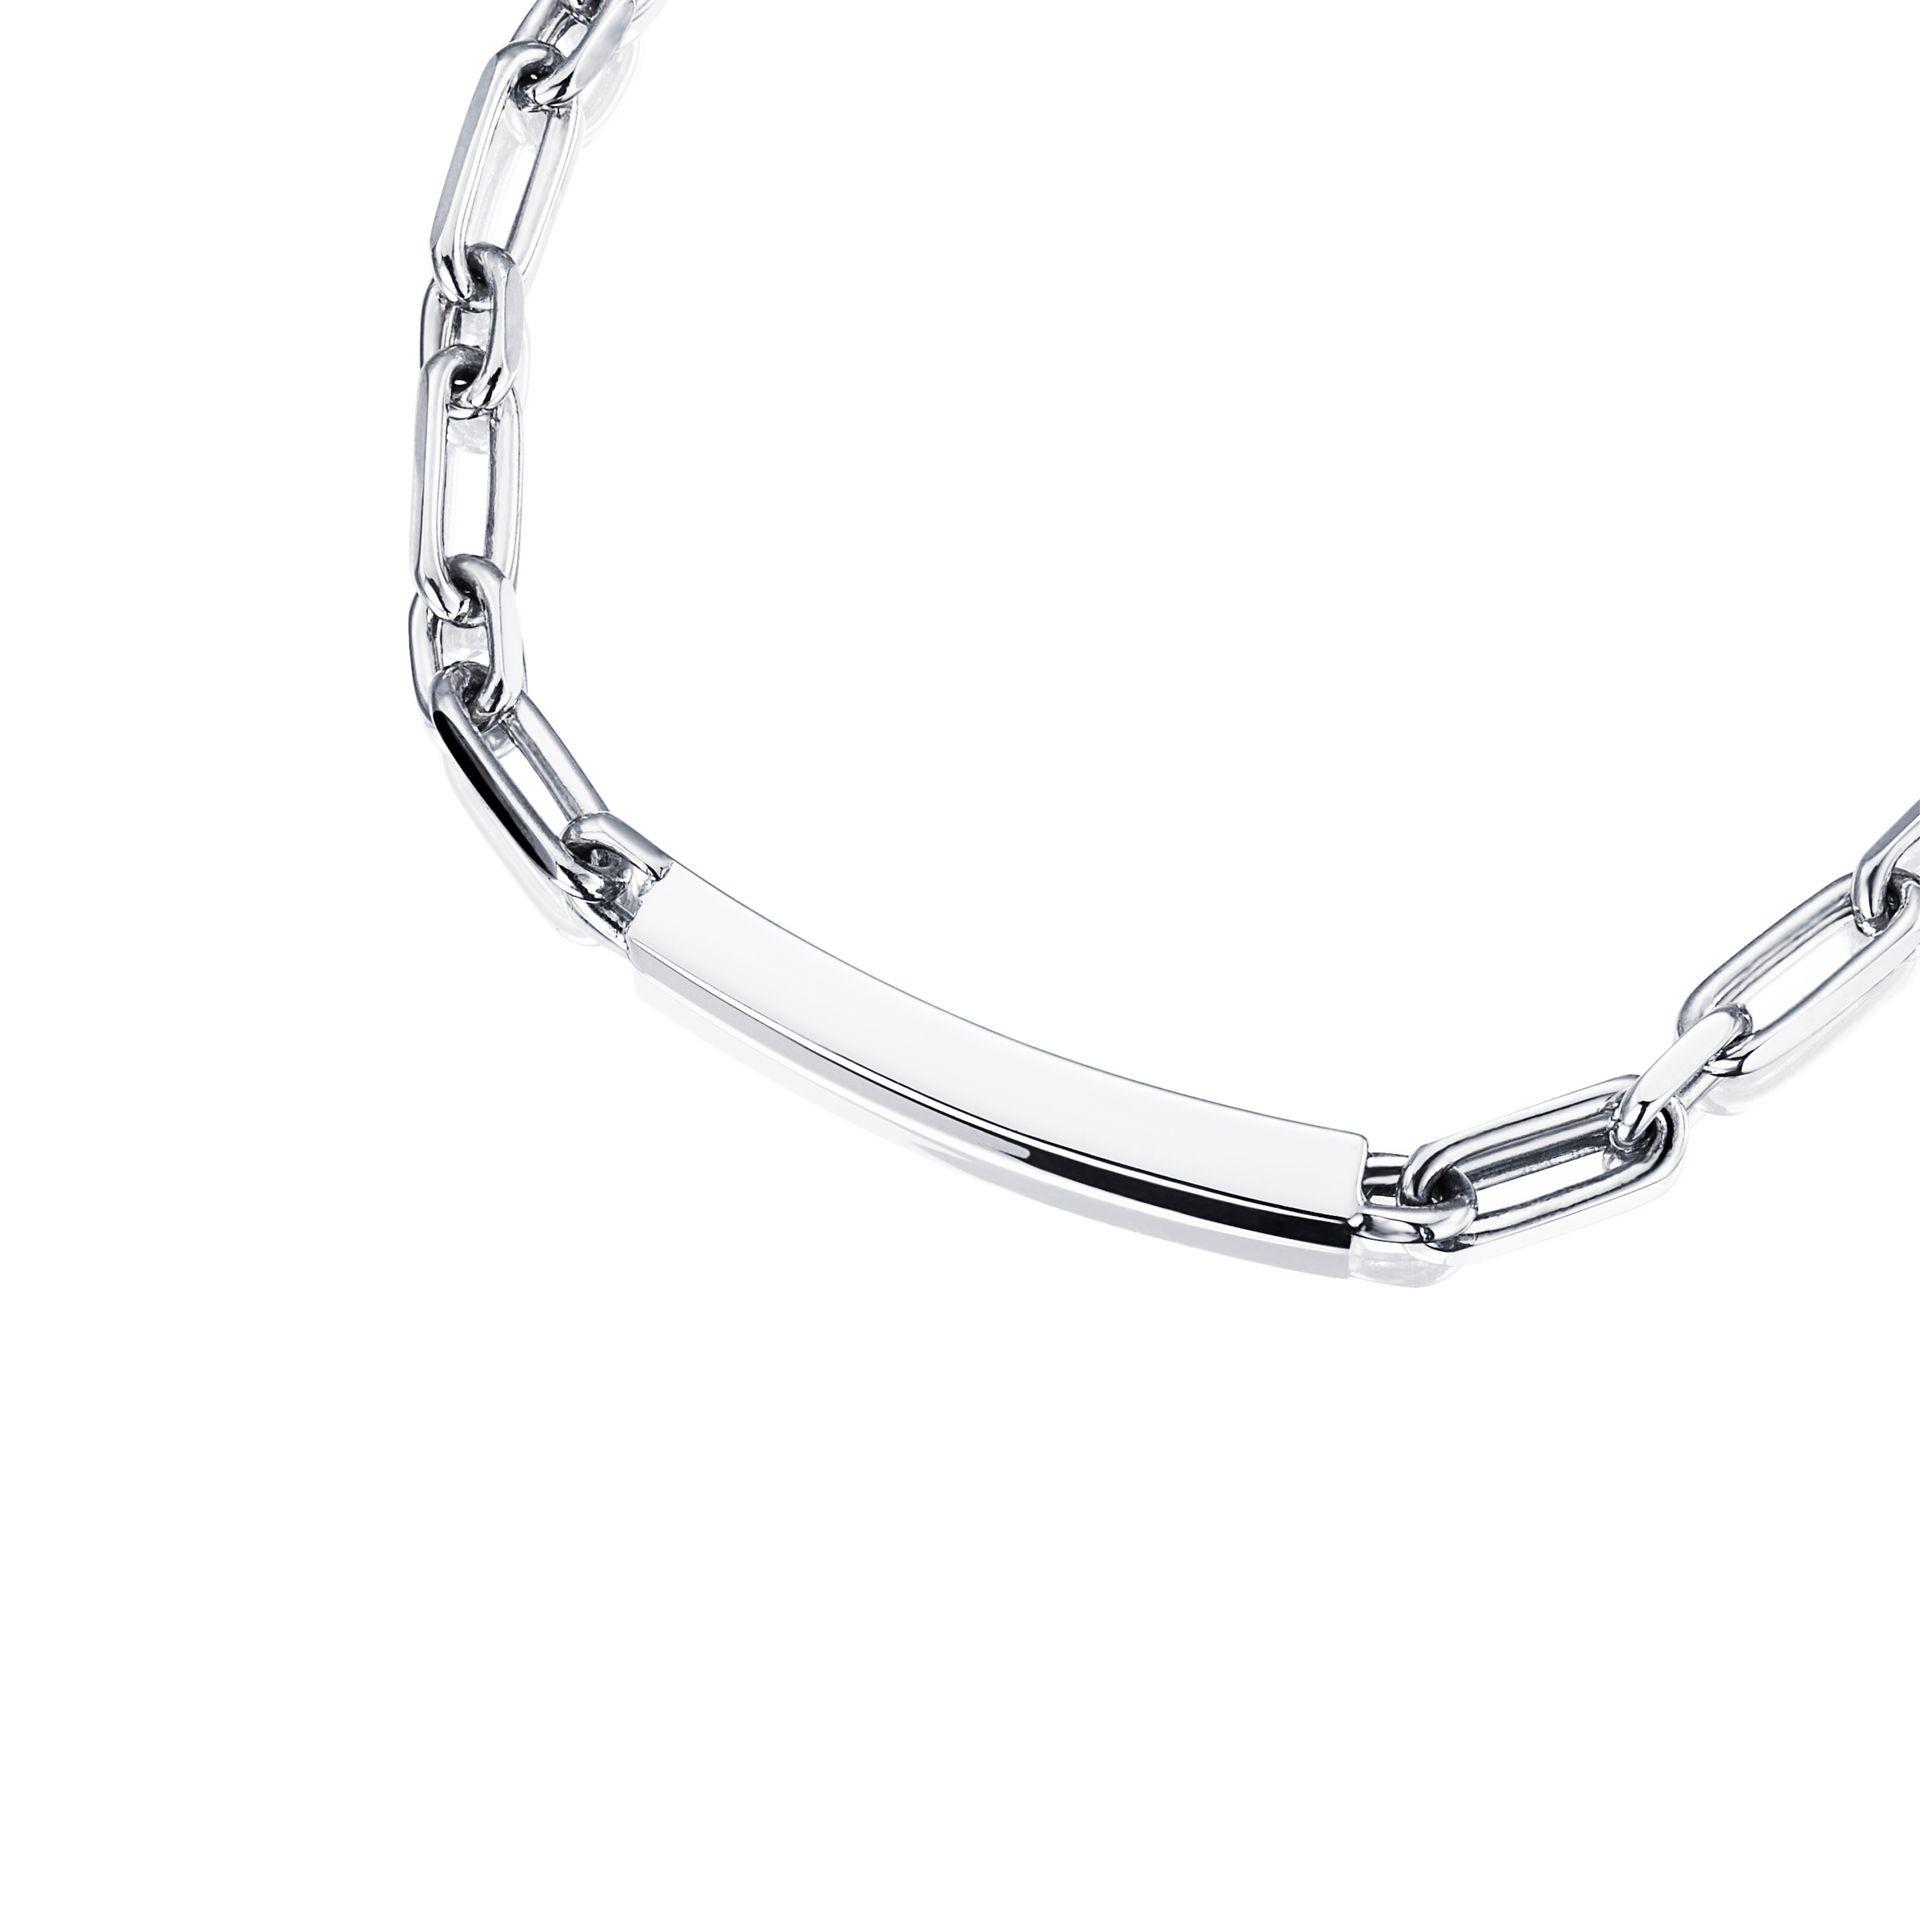 Thin Silver Bracelet